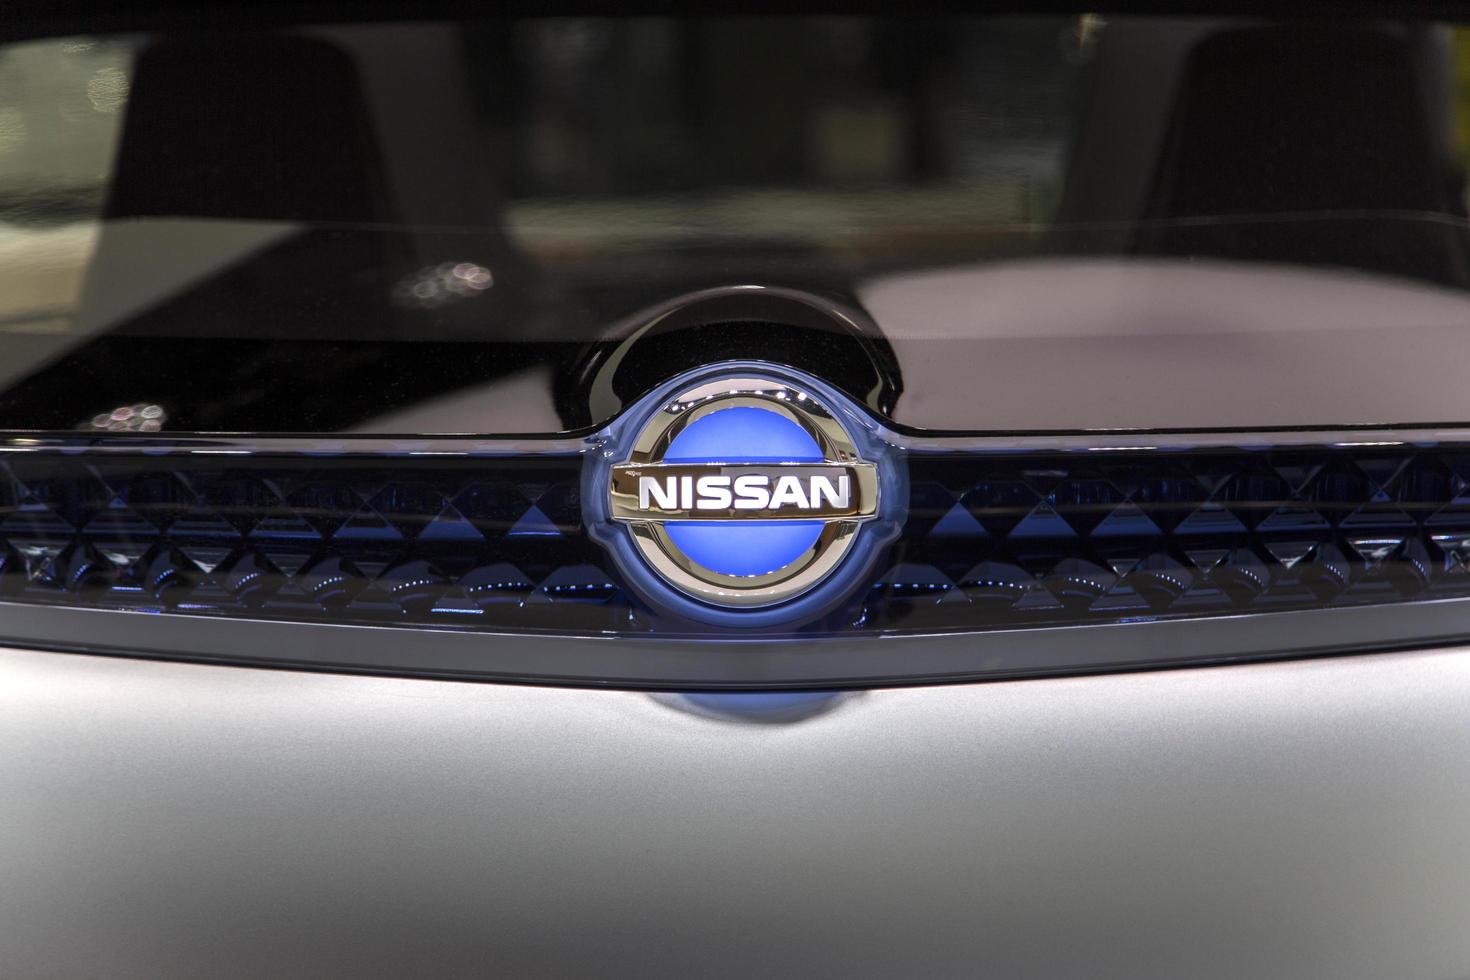 Tokyo, Japan, 2016 - Detail of the Nissan car in Tokyo, Japan. Nissan is a Japanese multinational automobile manufacturer headquartered in Nishi-ku, Yokohama photo